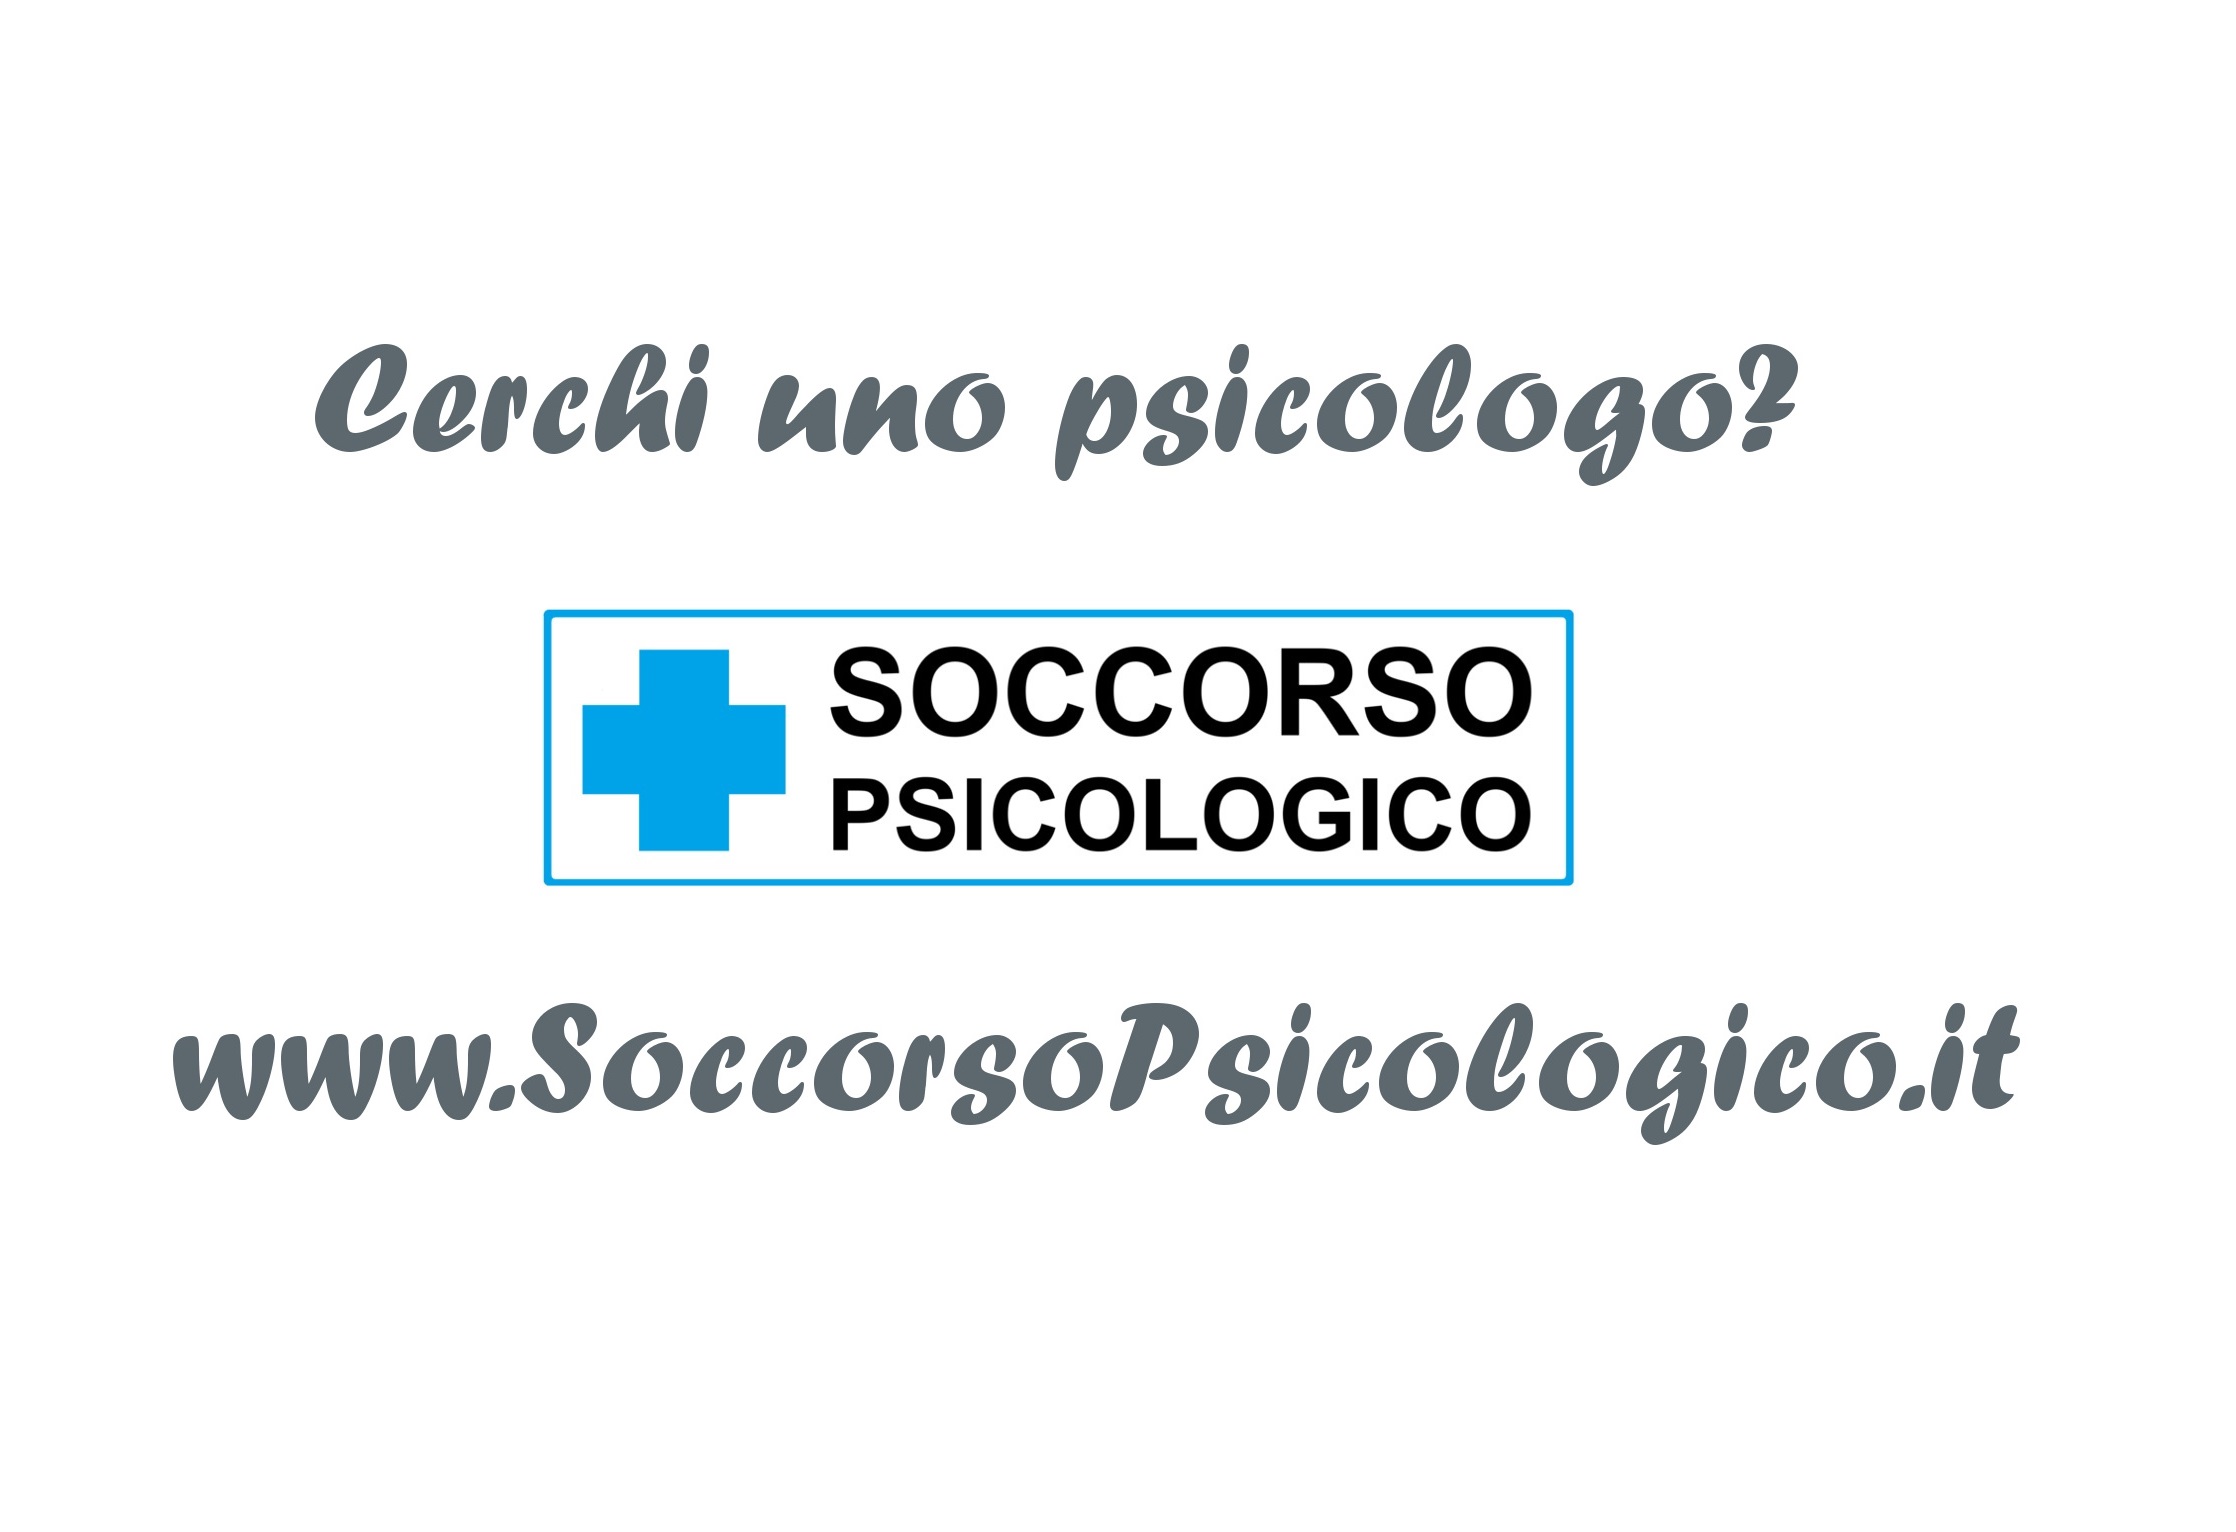 Cerchi uno Psicologo? Vai su www.SoccorsoPsicologico.it!